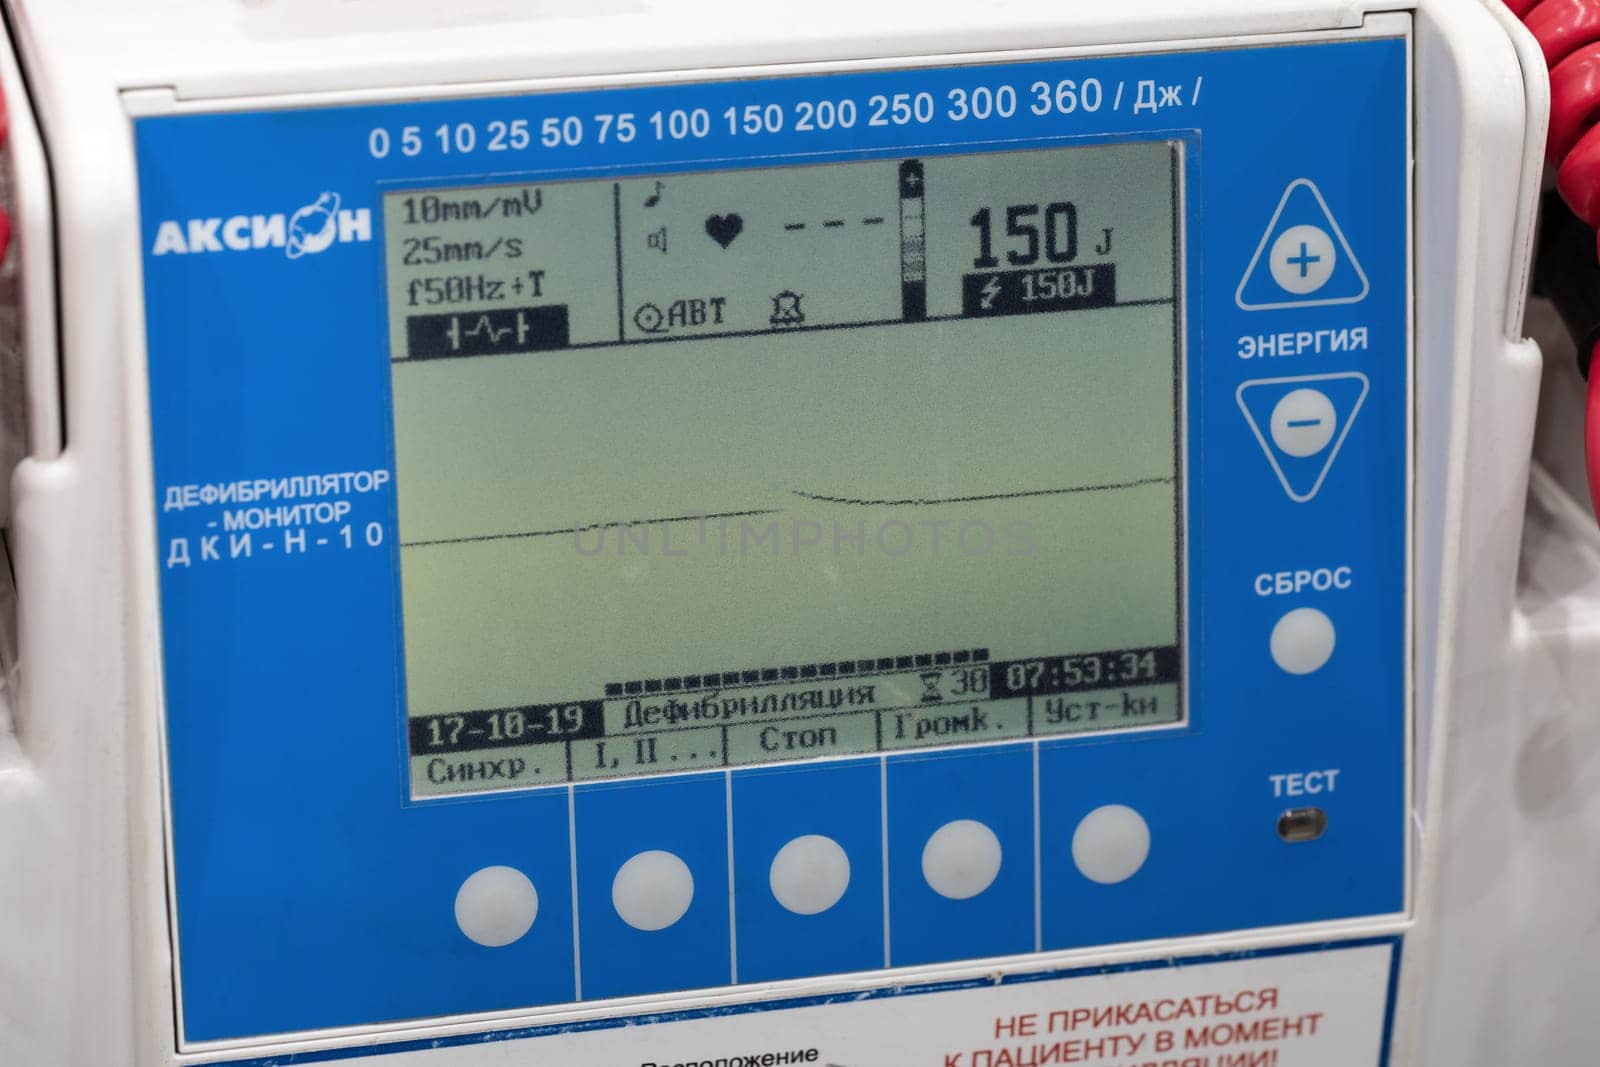 Close-up view Russian defibrillator monitor Axion DKI-N-10 for life-threatening cardiac dysrhythmias, ventricular fibrillation, non-perfusing ventricular tachycardia. Kamchatka, Russia - Oct 17, 2019